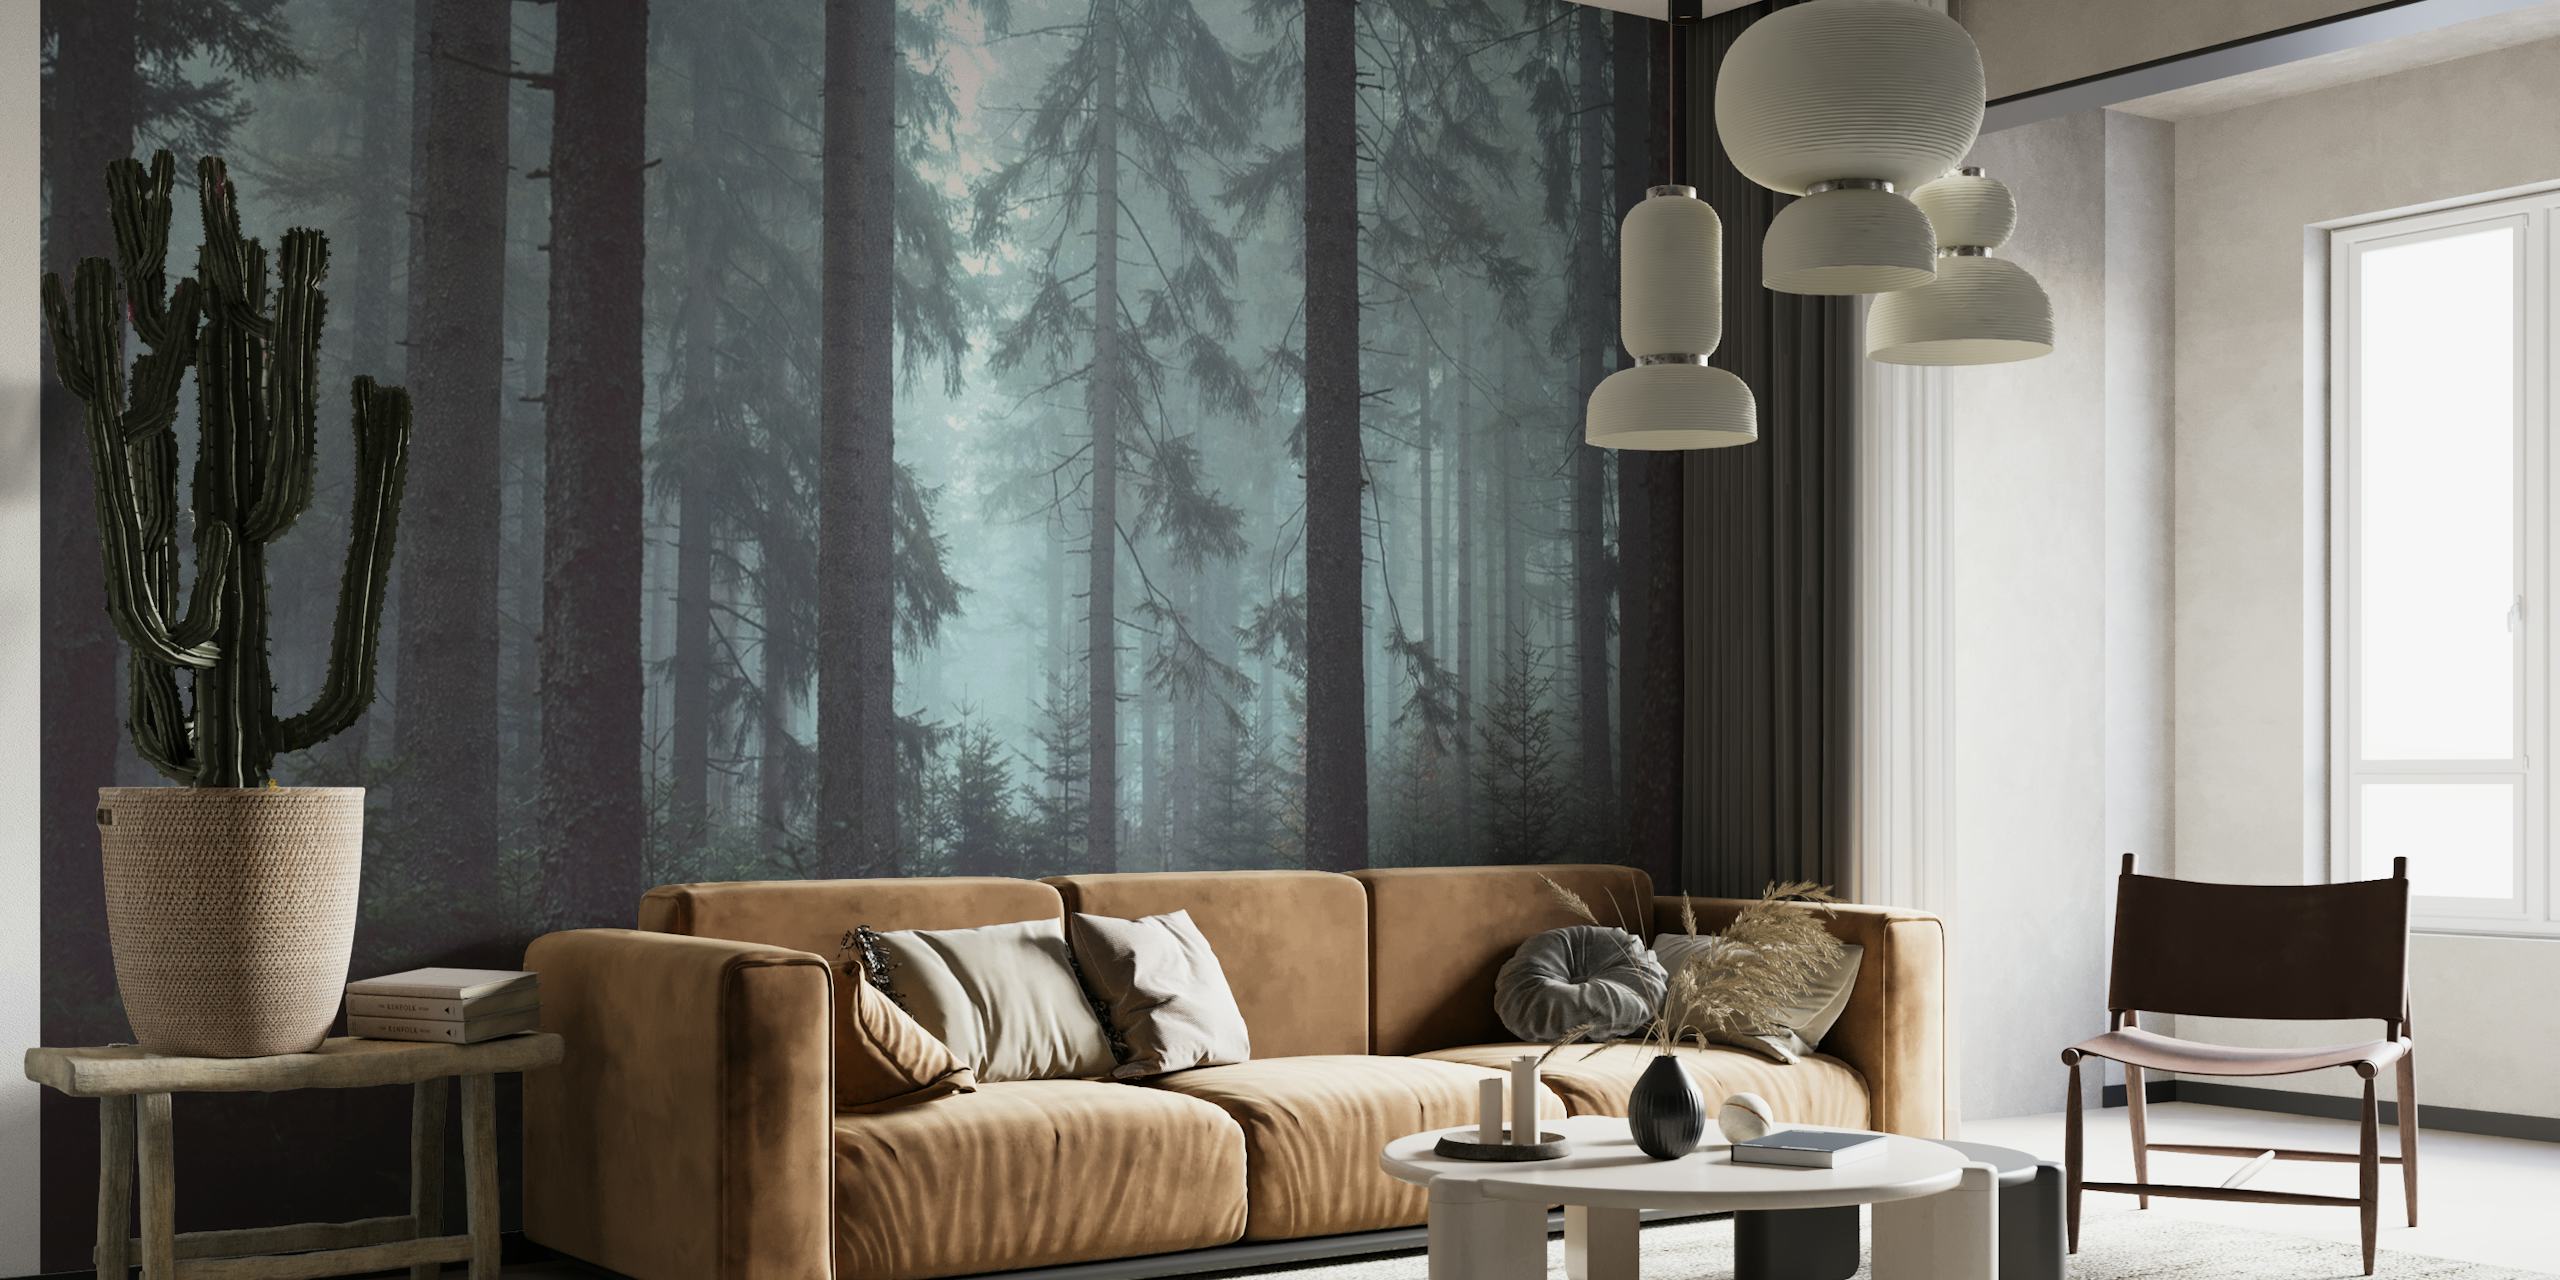 Misty pine forest wallpaper